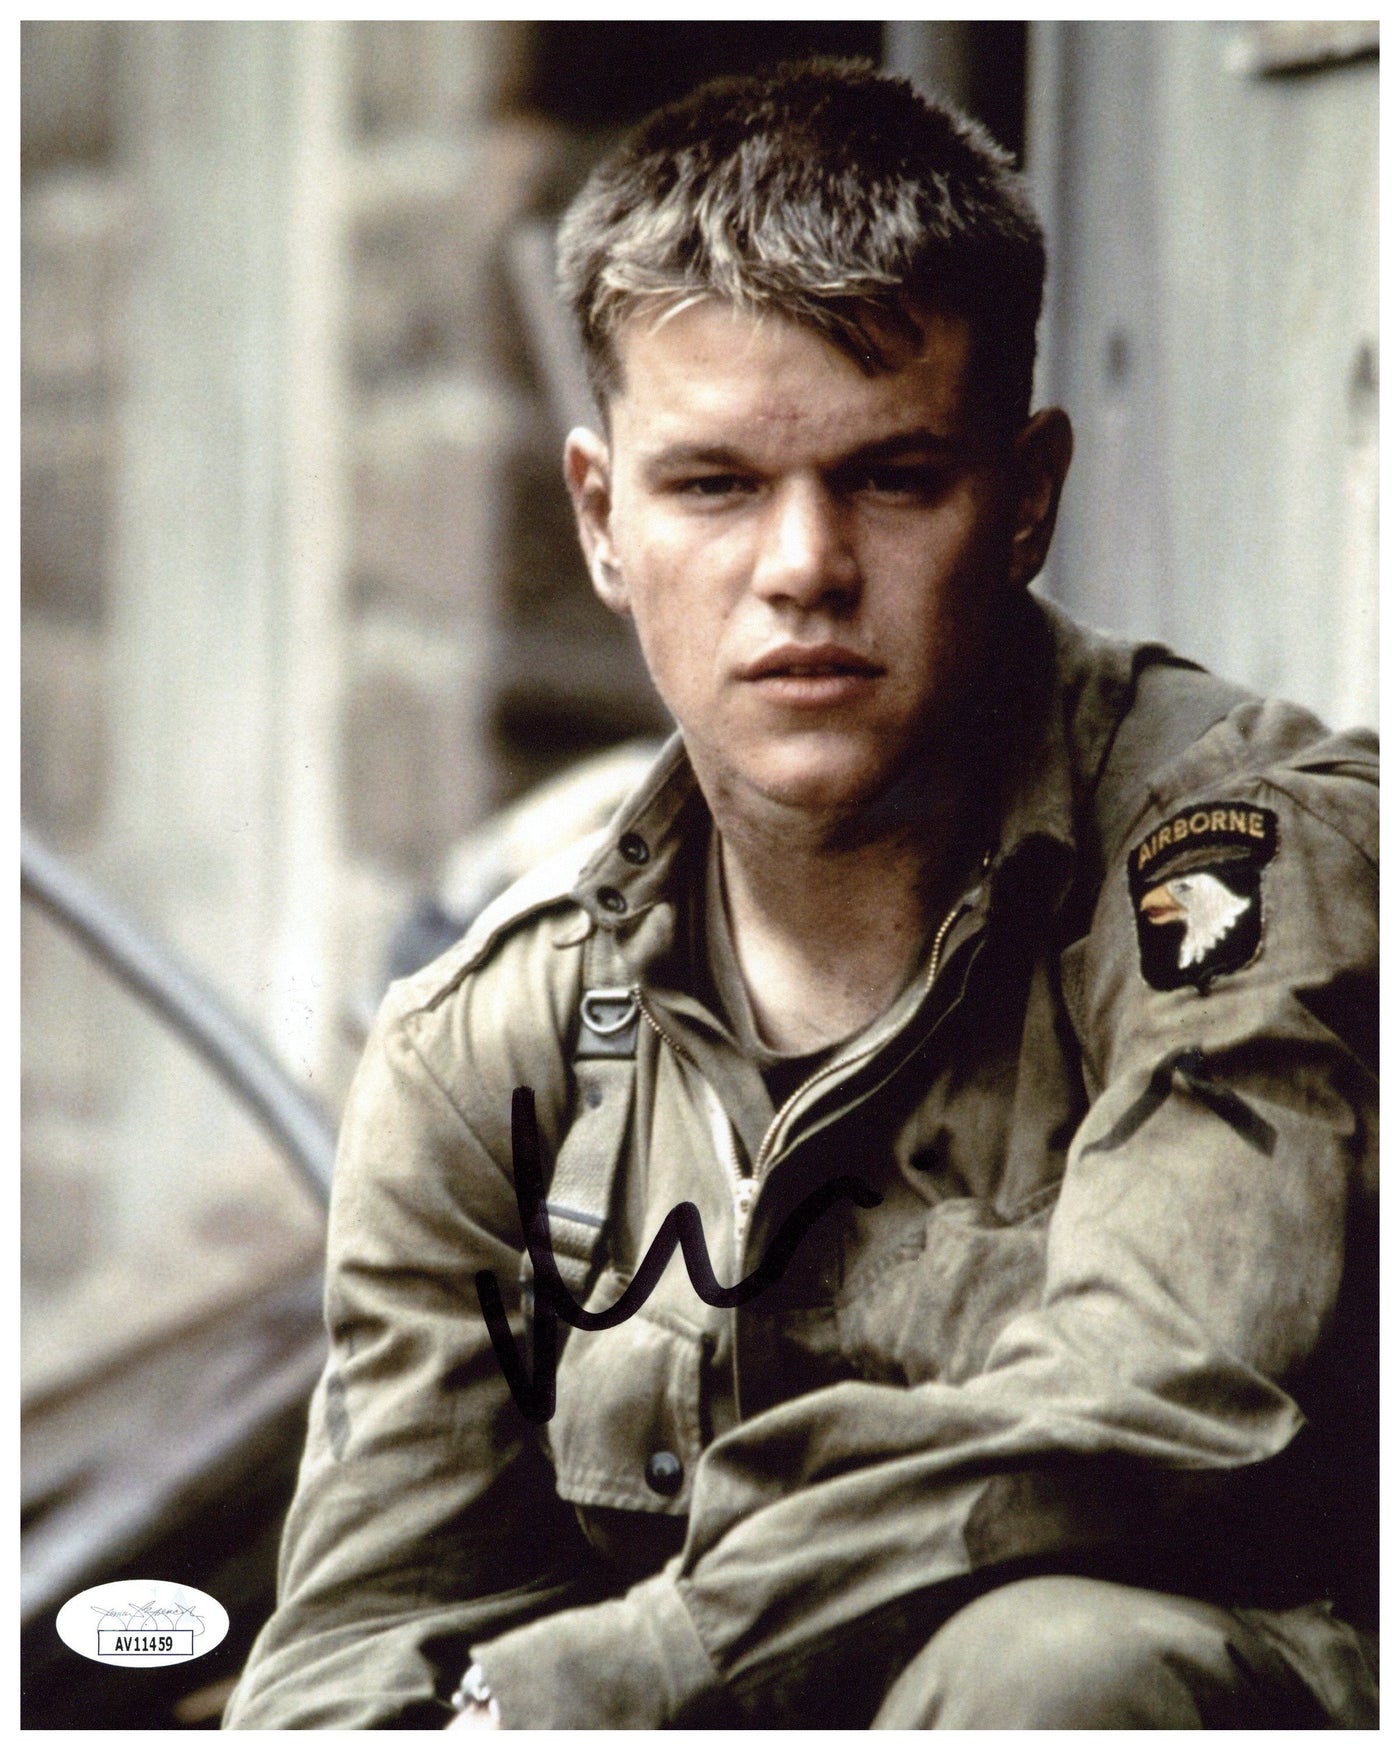 Matt Damon Signed 8x10 Photo Saving Private Ryan Autographed Authentic JSA COA